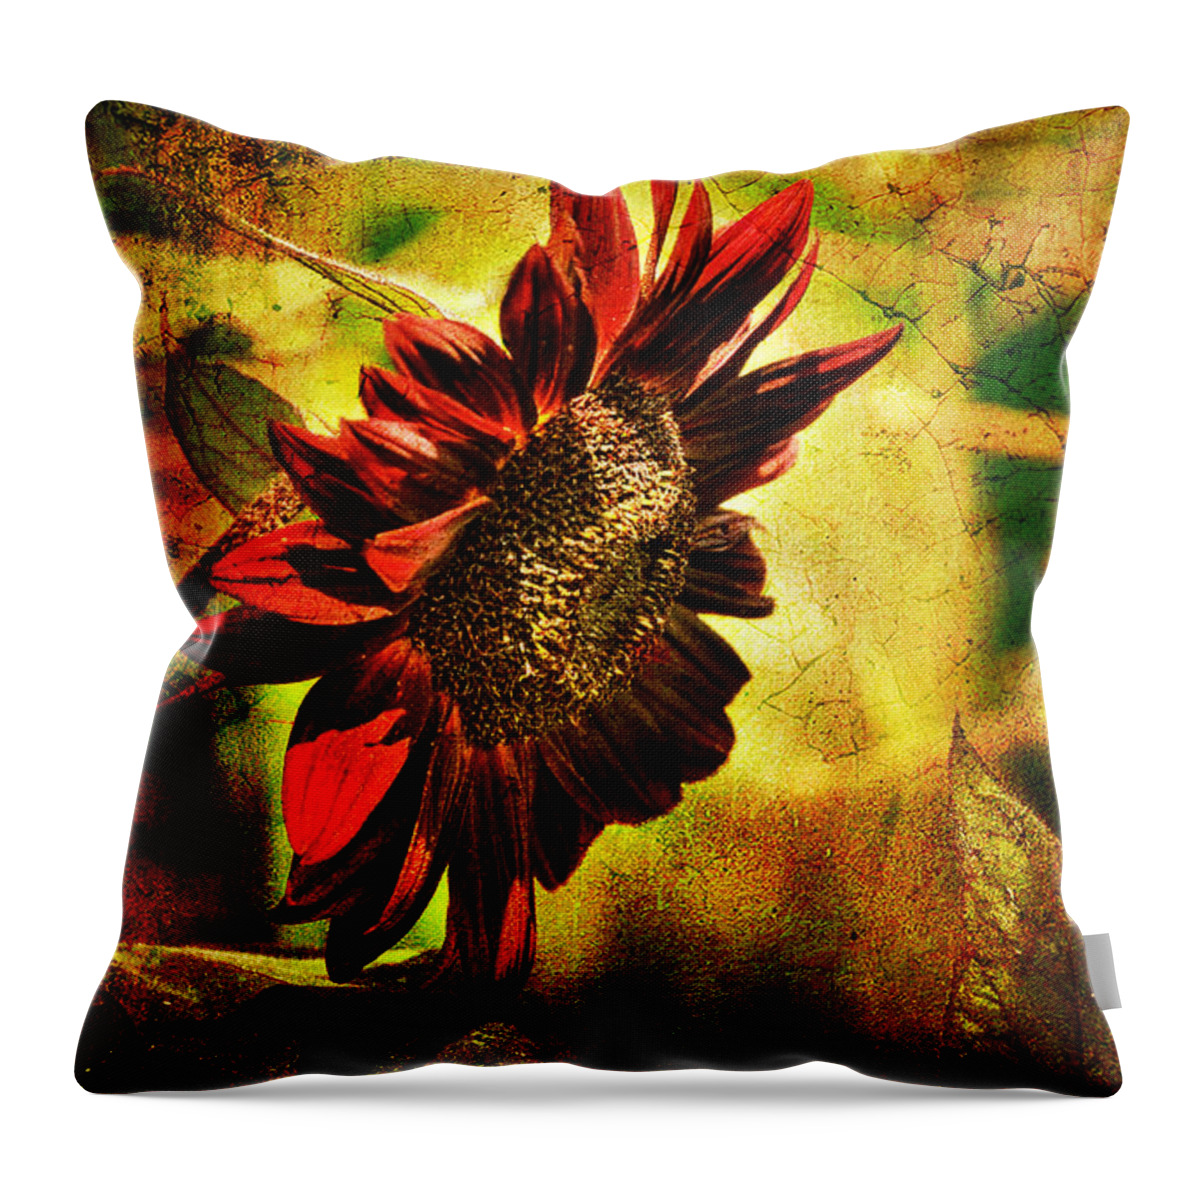 Sunflower Throw Pillow featuring the photograph Sunflower by Lois Bryan